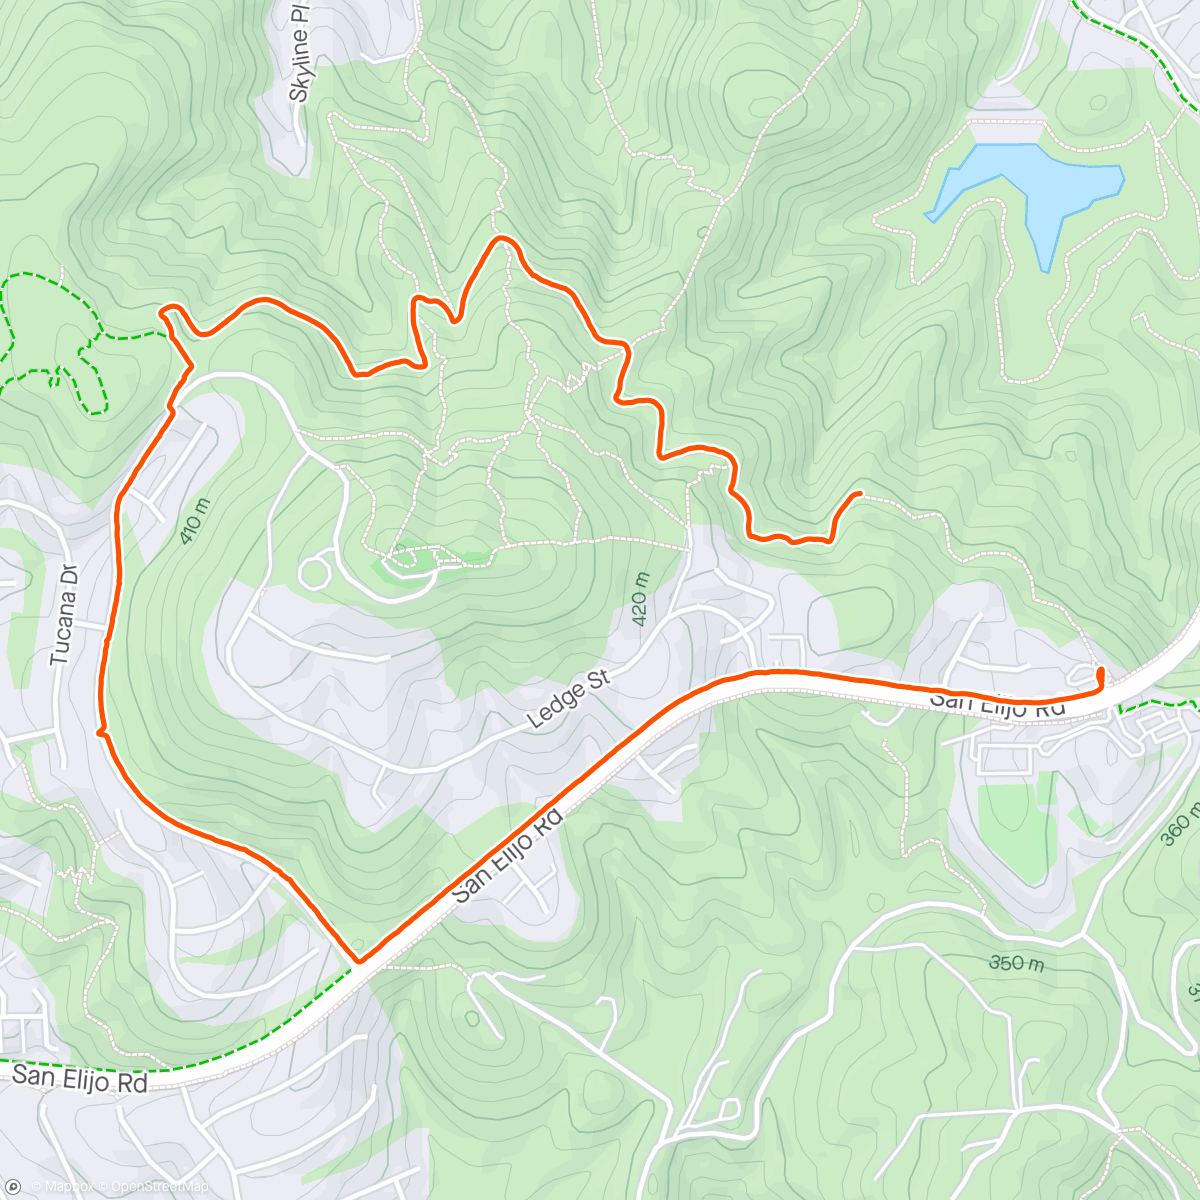 Map of the activity, BWR Trash walk